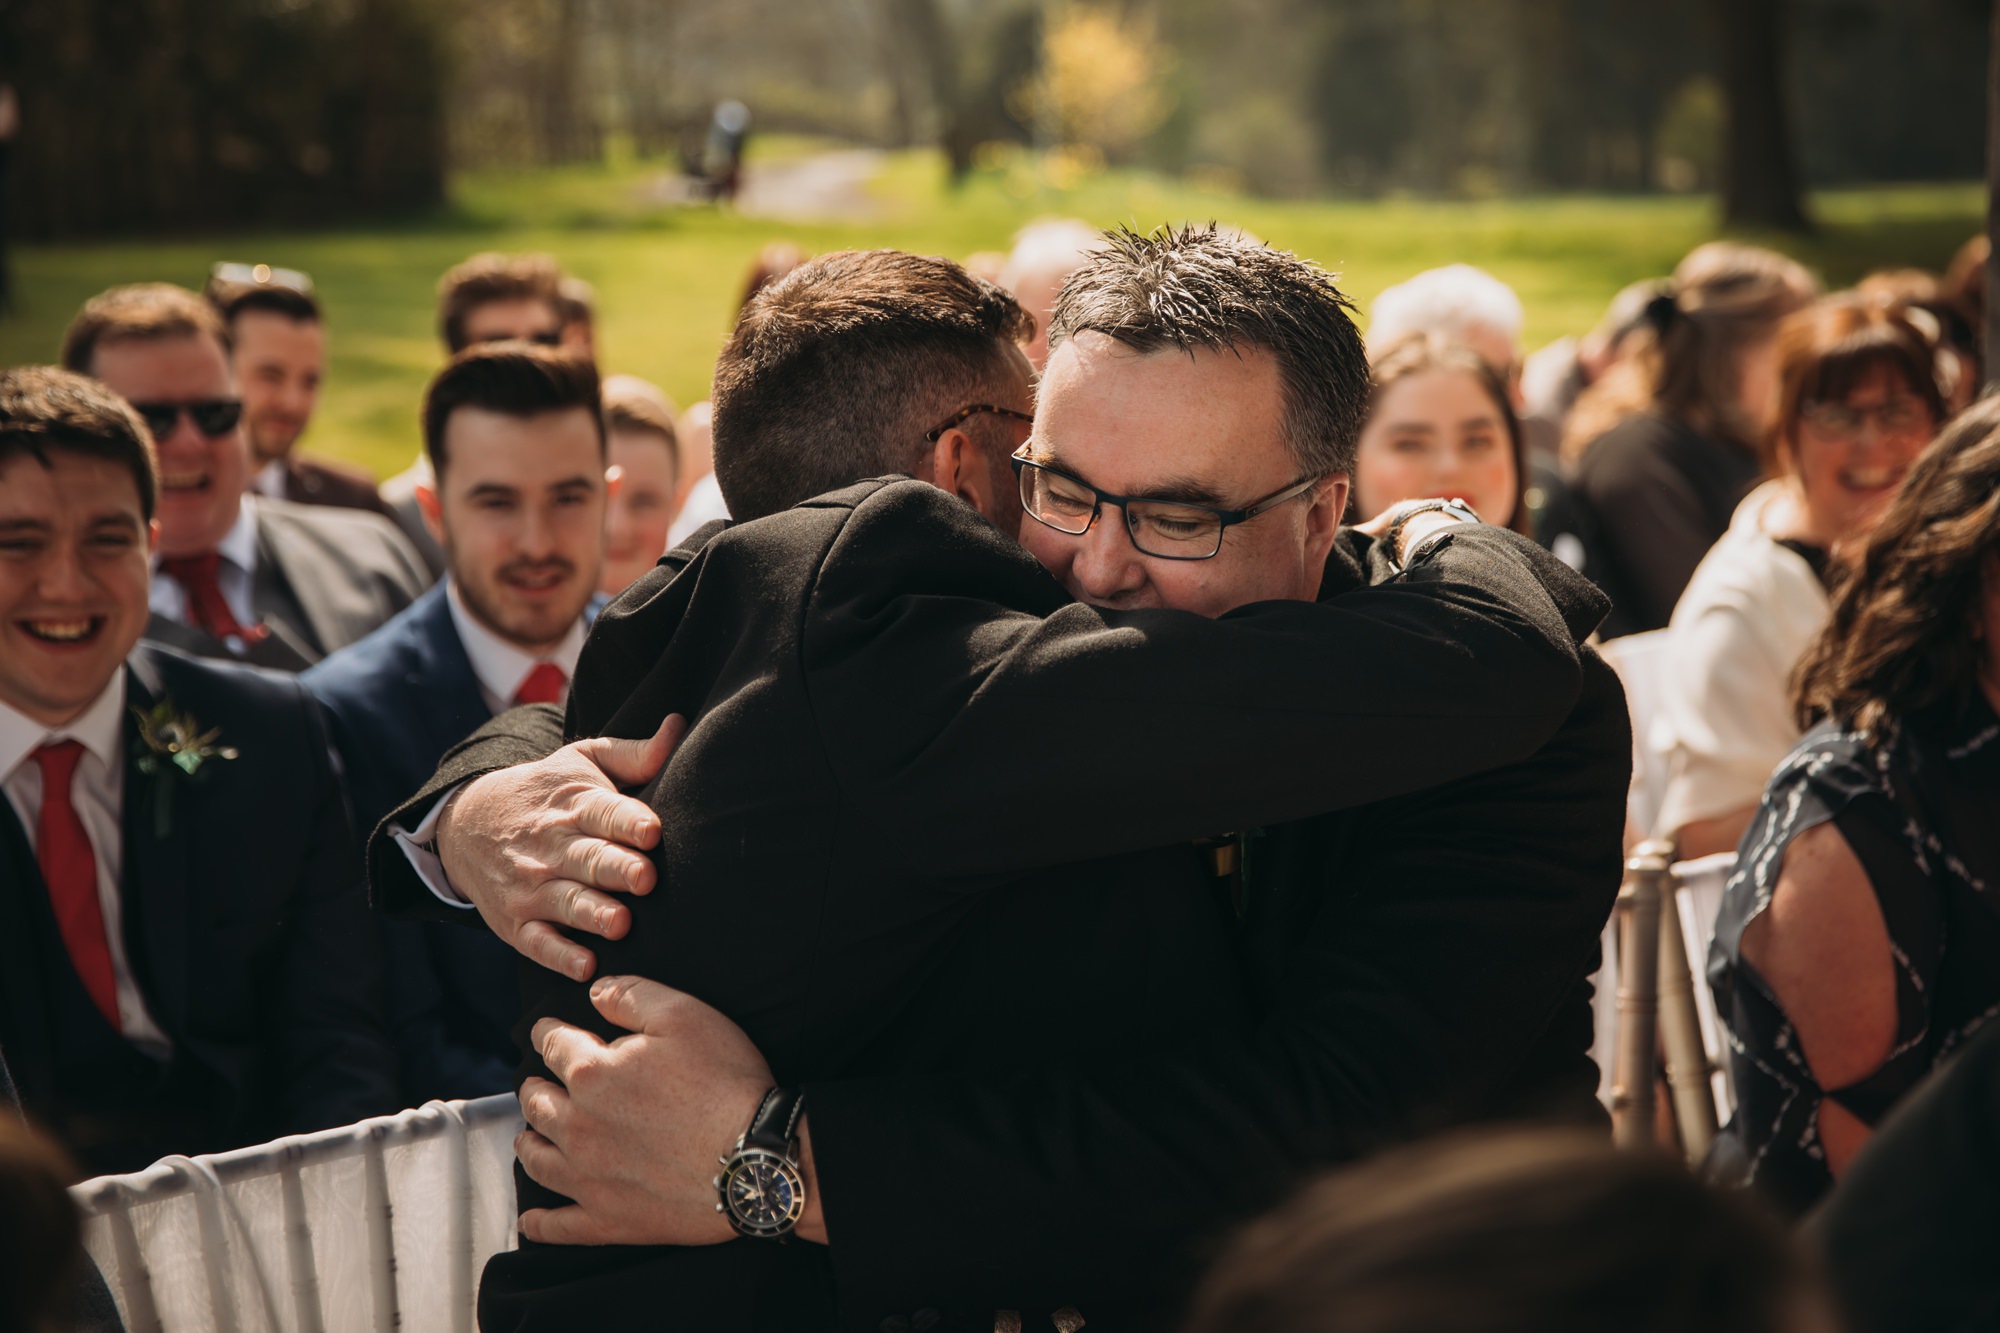 Mexican hugs between strangers at a High Wards wedding